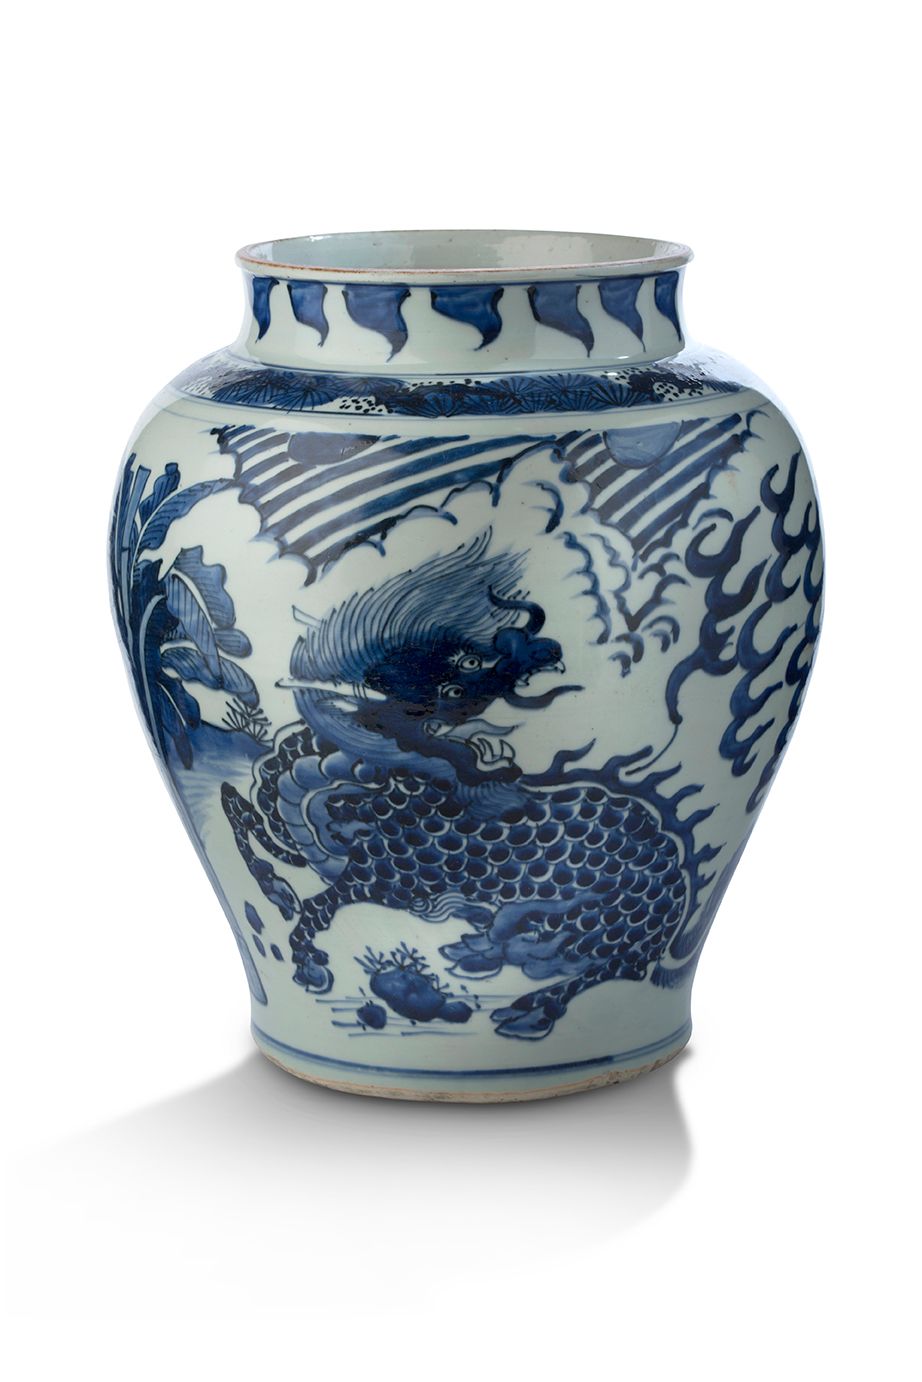 CHINE ÉPOQUE SHUNZHI (1643-1661) Large shouldered jar
In blue-white porcelain de&hellip;